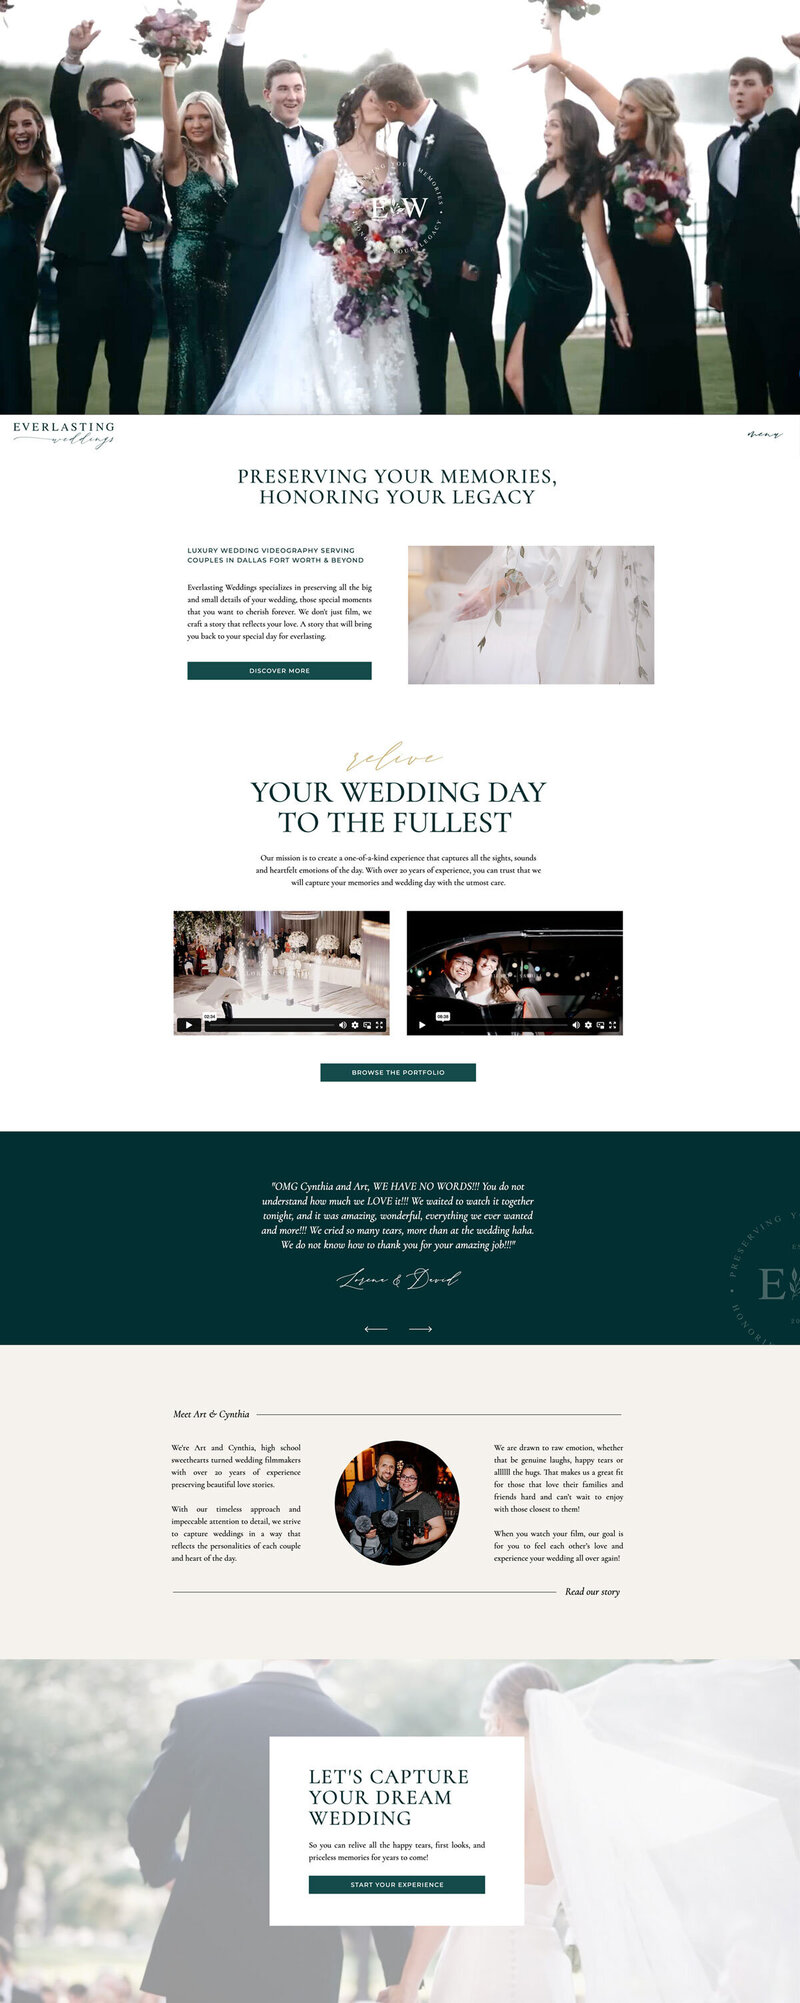 everlasting weddings website transformation